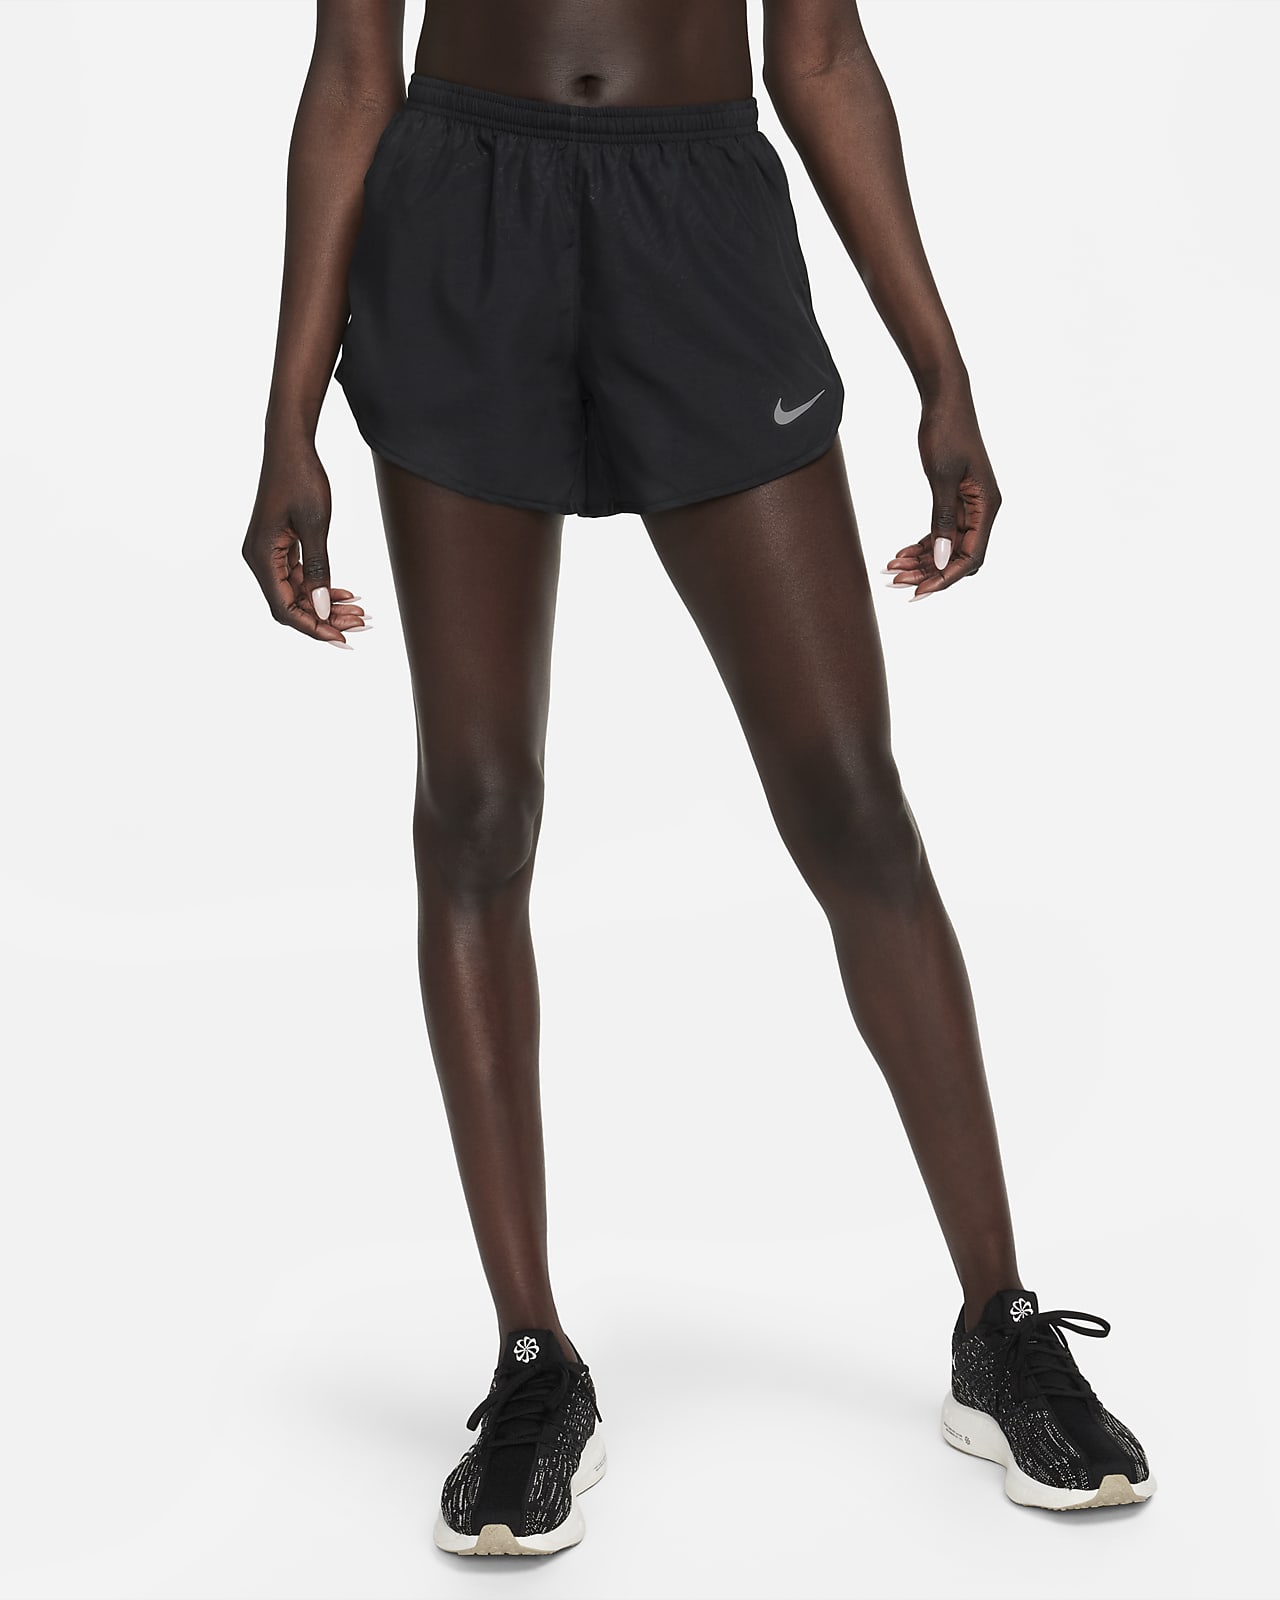 Shorts de running con forro de ropa interior para mujer Nike Tempo